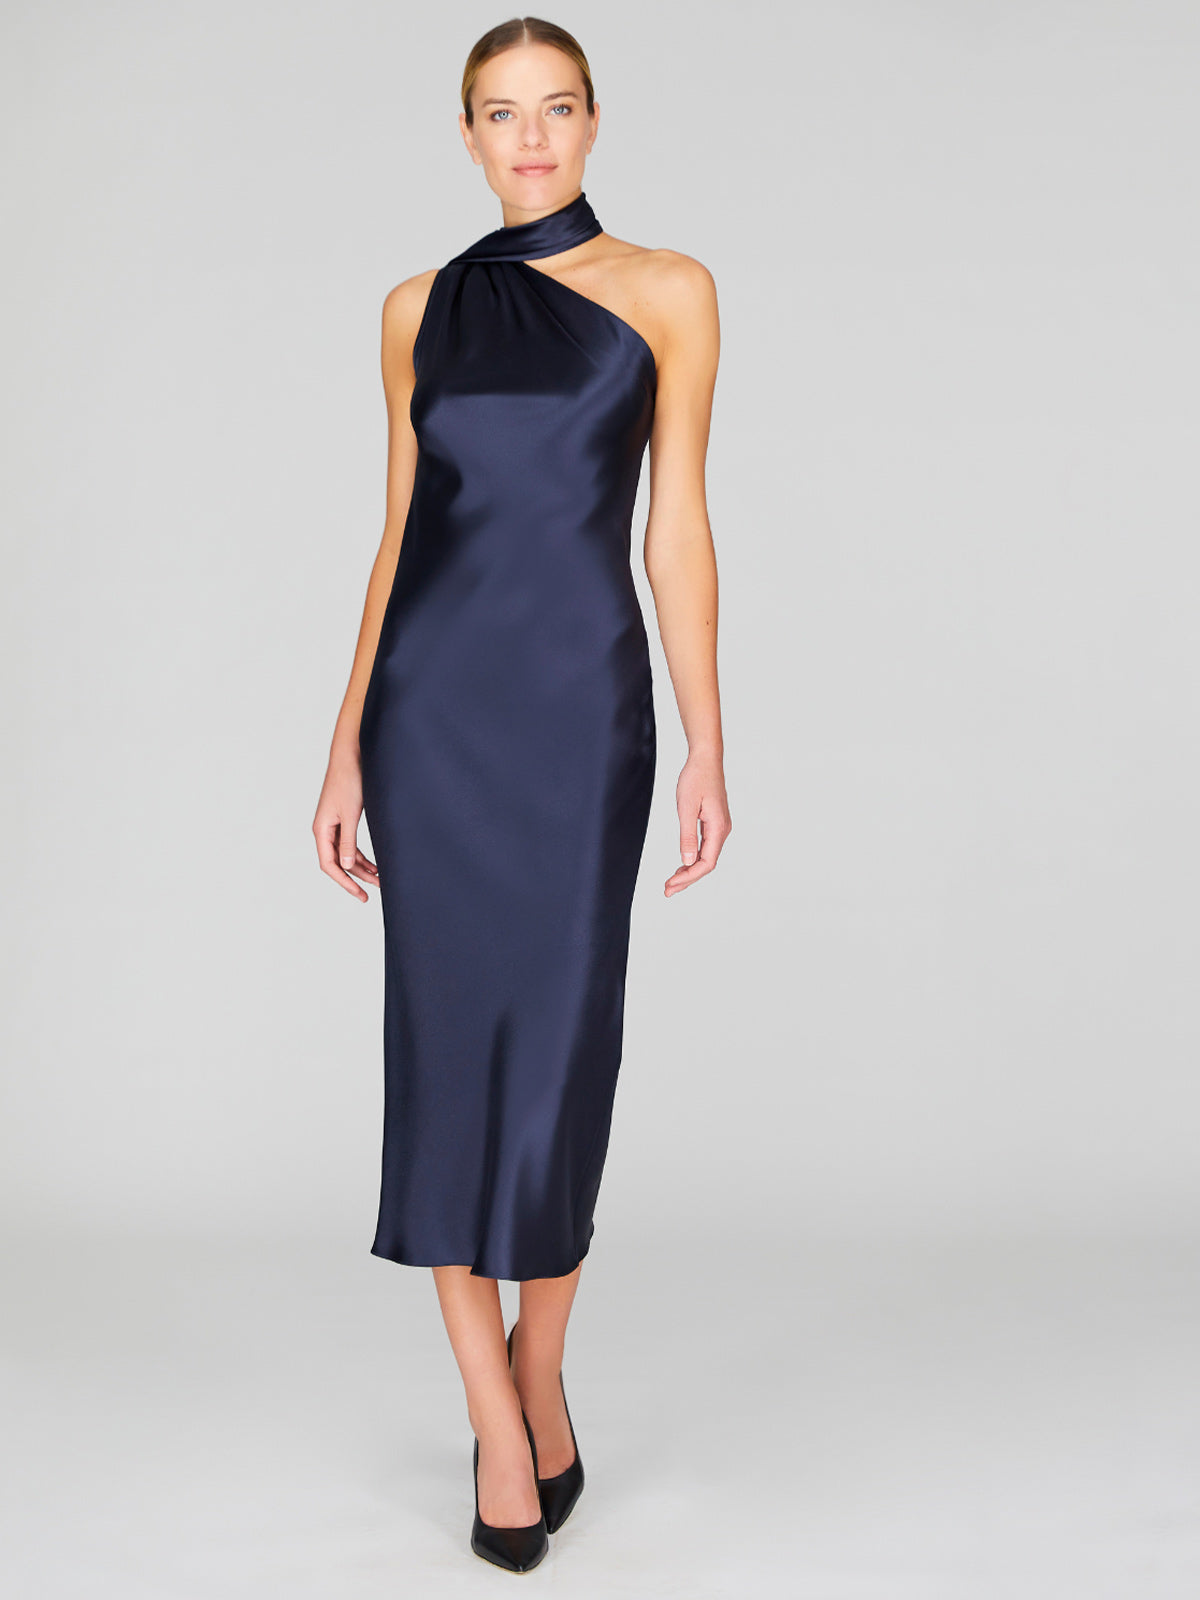 Black Tie Wedding Glam - One-Shoulder Burgundy Rhinestone Dress —  Mybeautyfavs